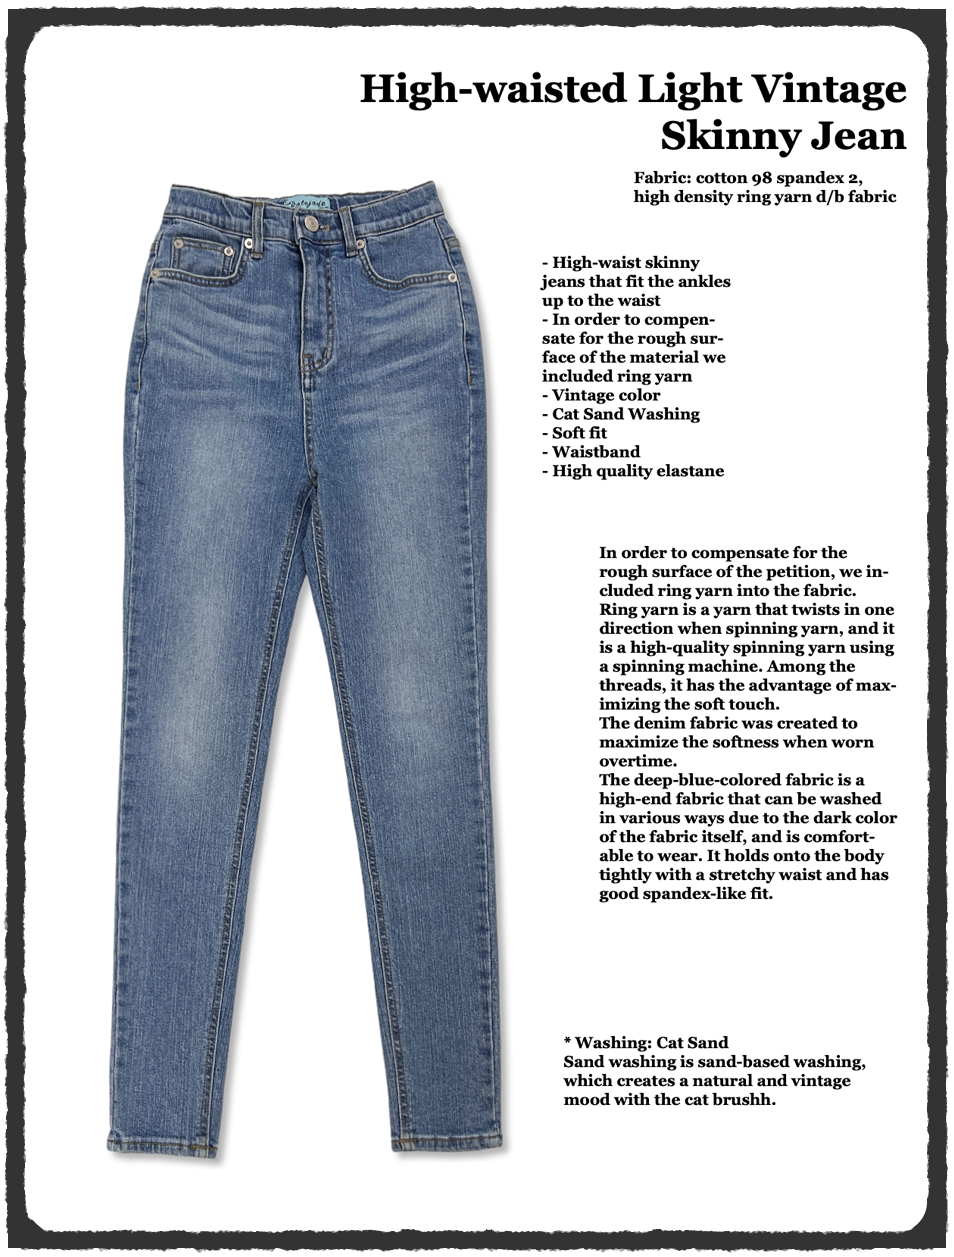 High-waisted Light Vintage Skinny Jean